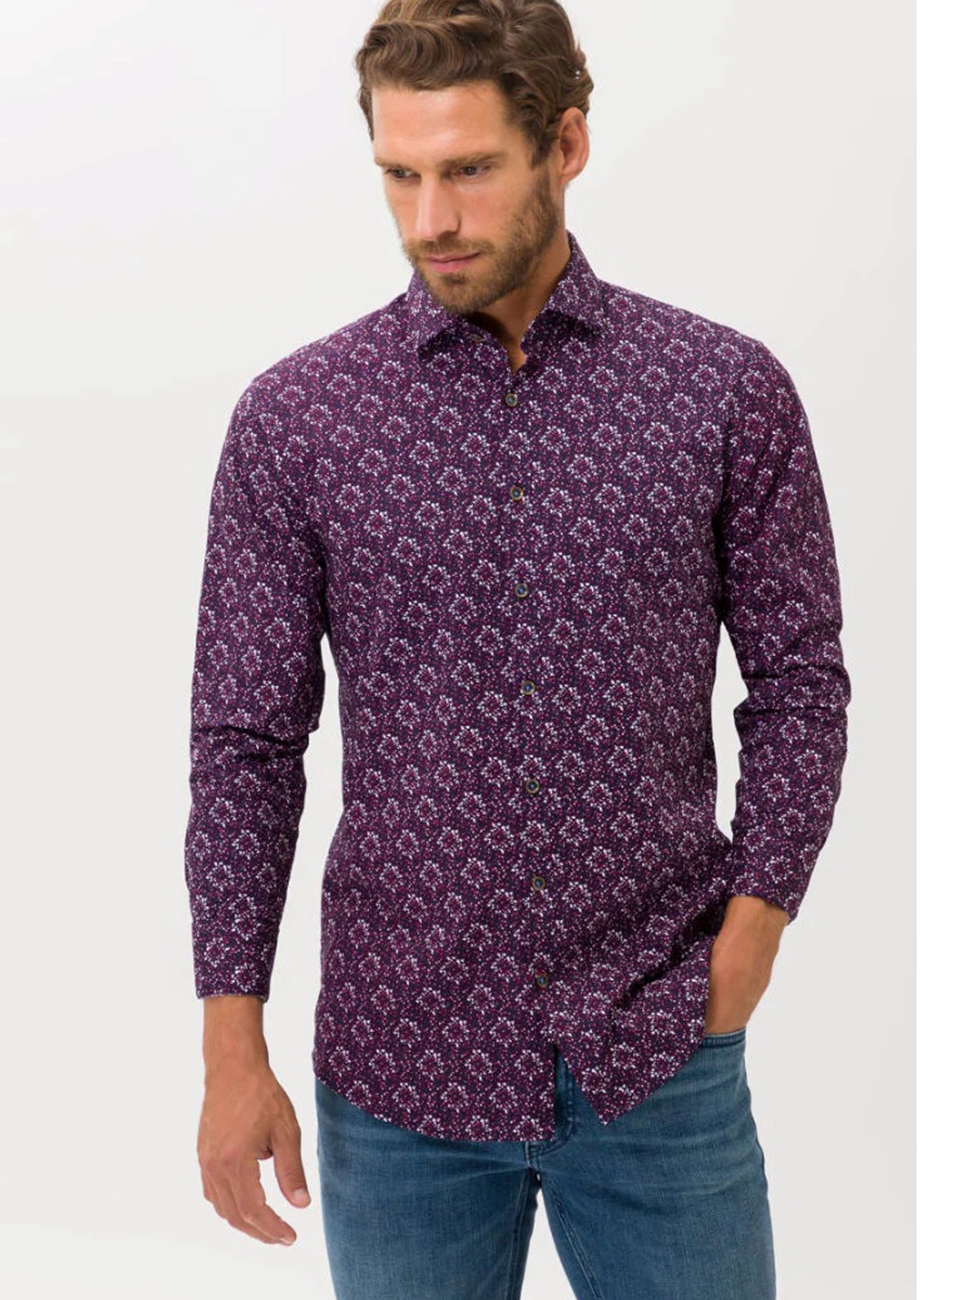 Lavender Harold P Hi Flex Easy Care Shirt | Brax Men's Shirts Collection |  Sam's Tailoring Fine Men Clothing